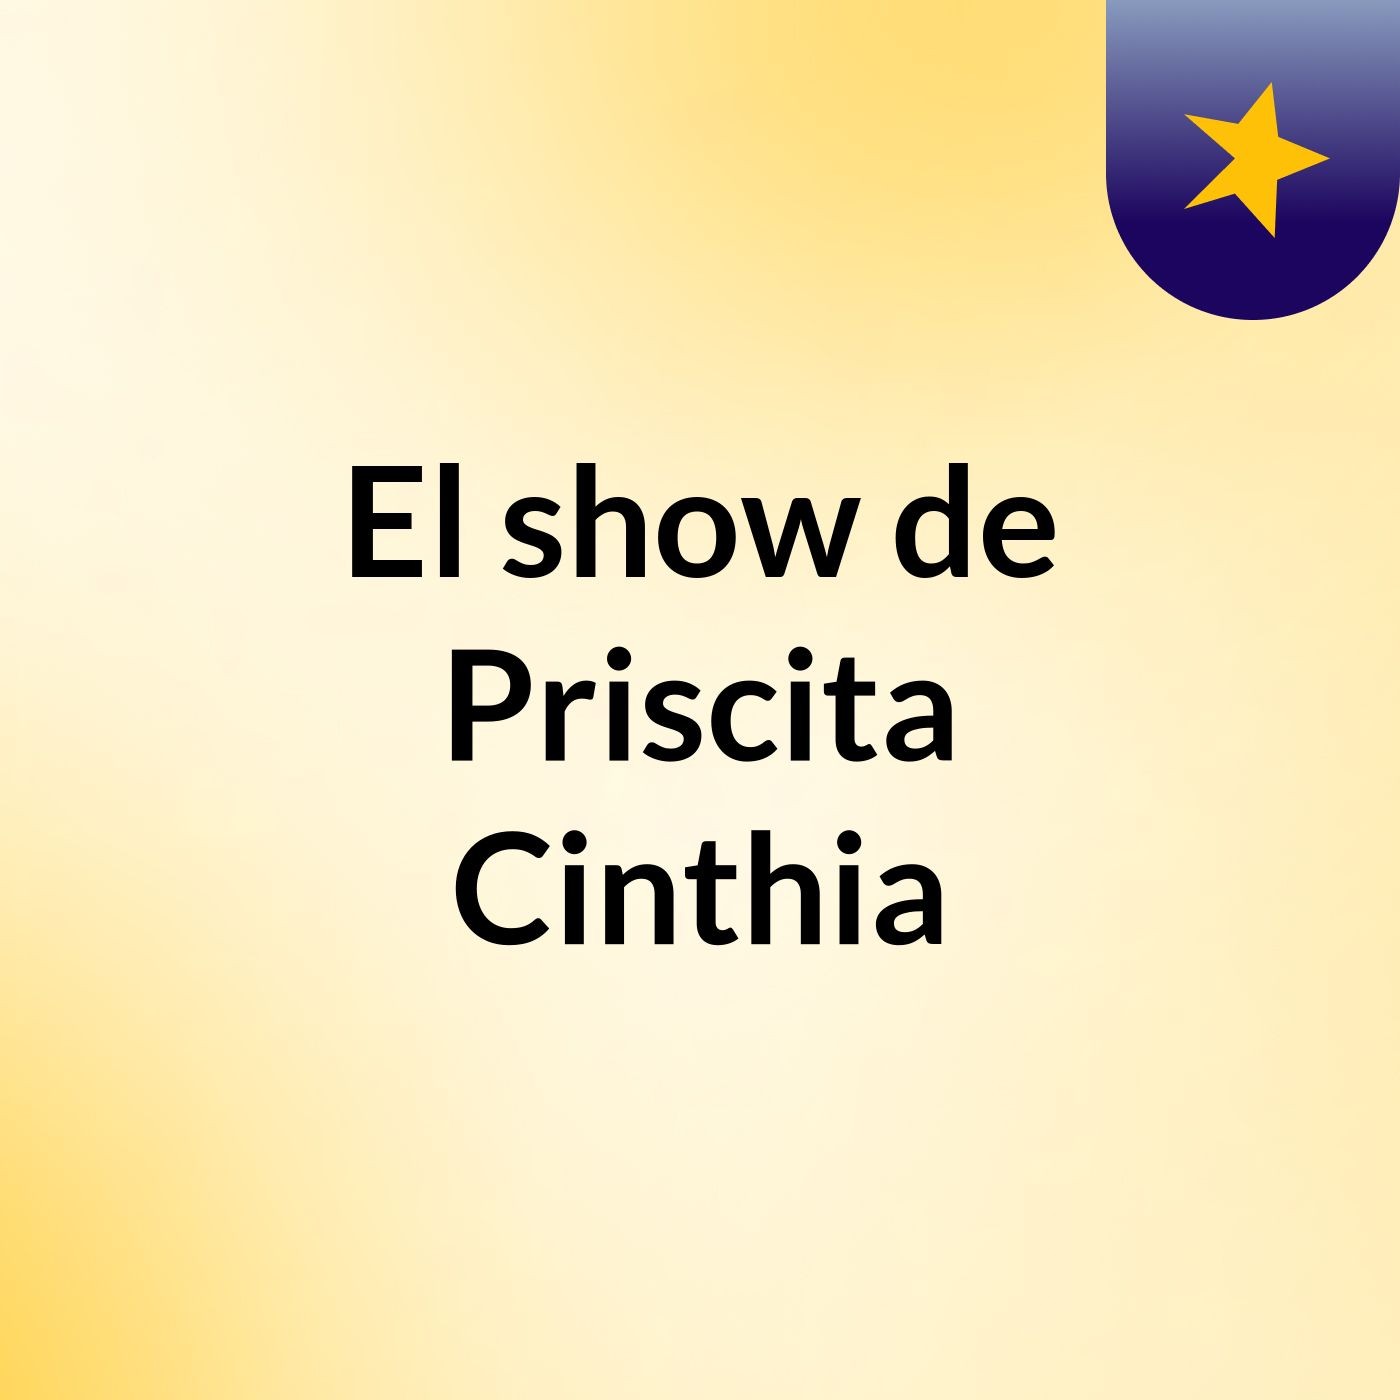 El show de Priscita Cinthia